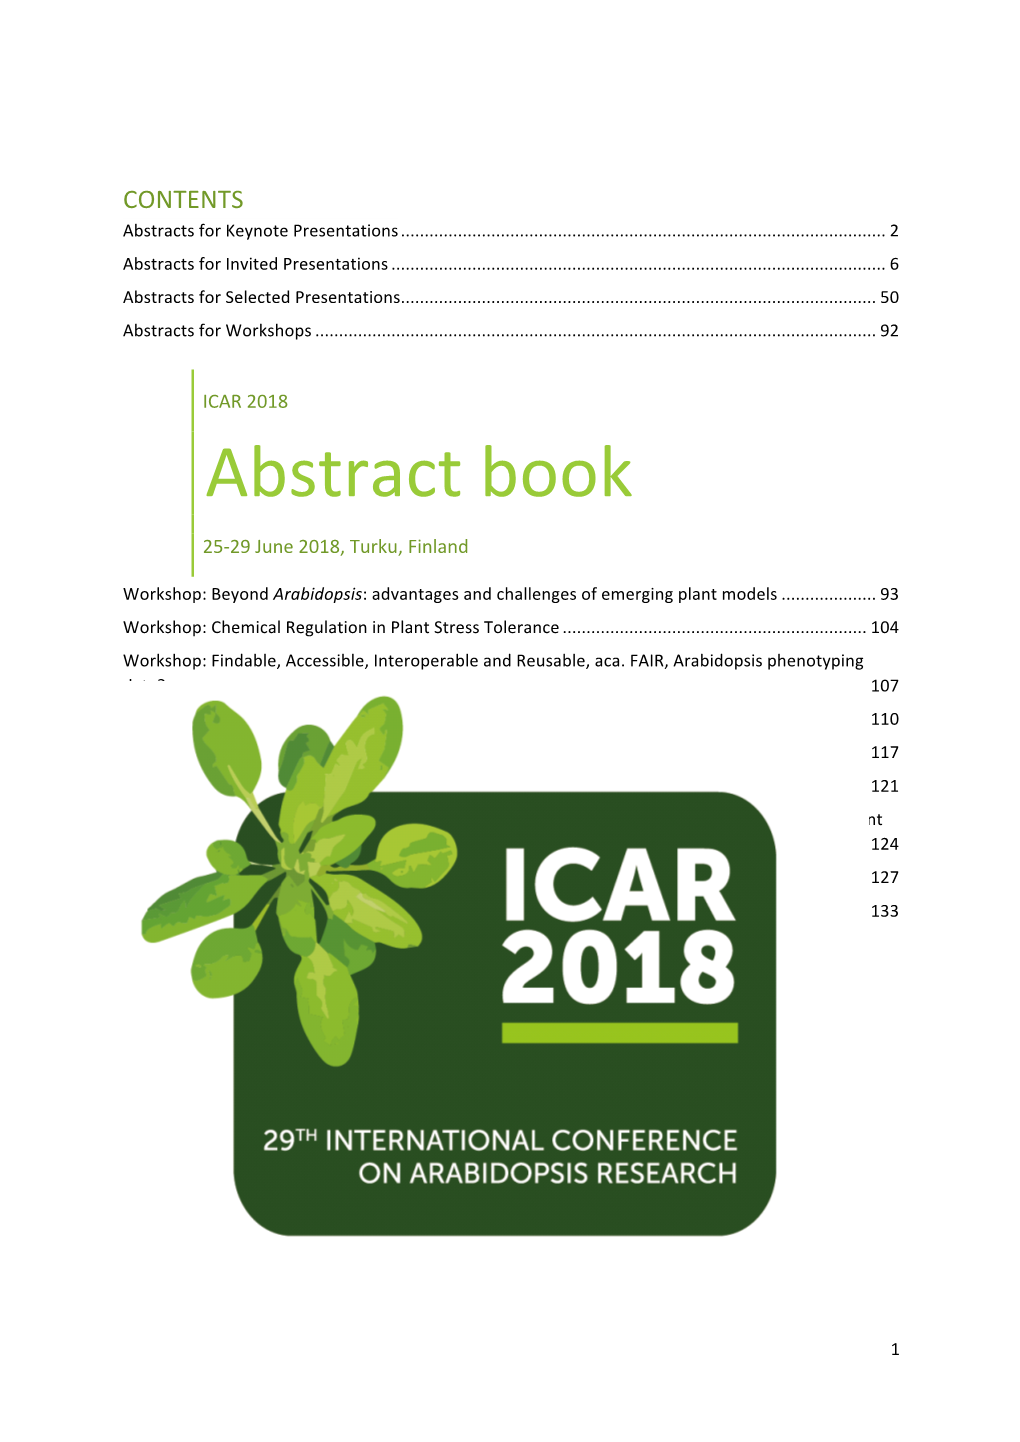 ICAR2018 Abstract Book